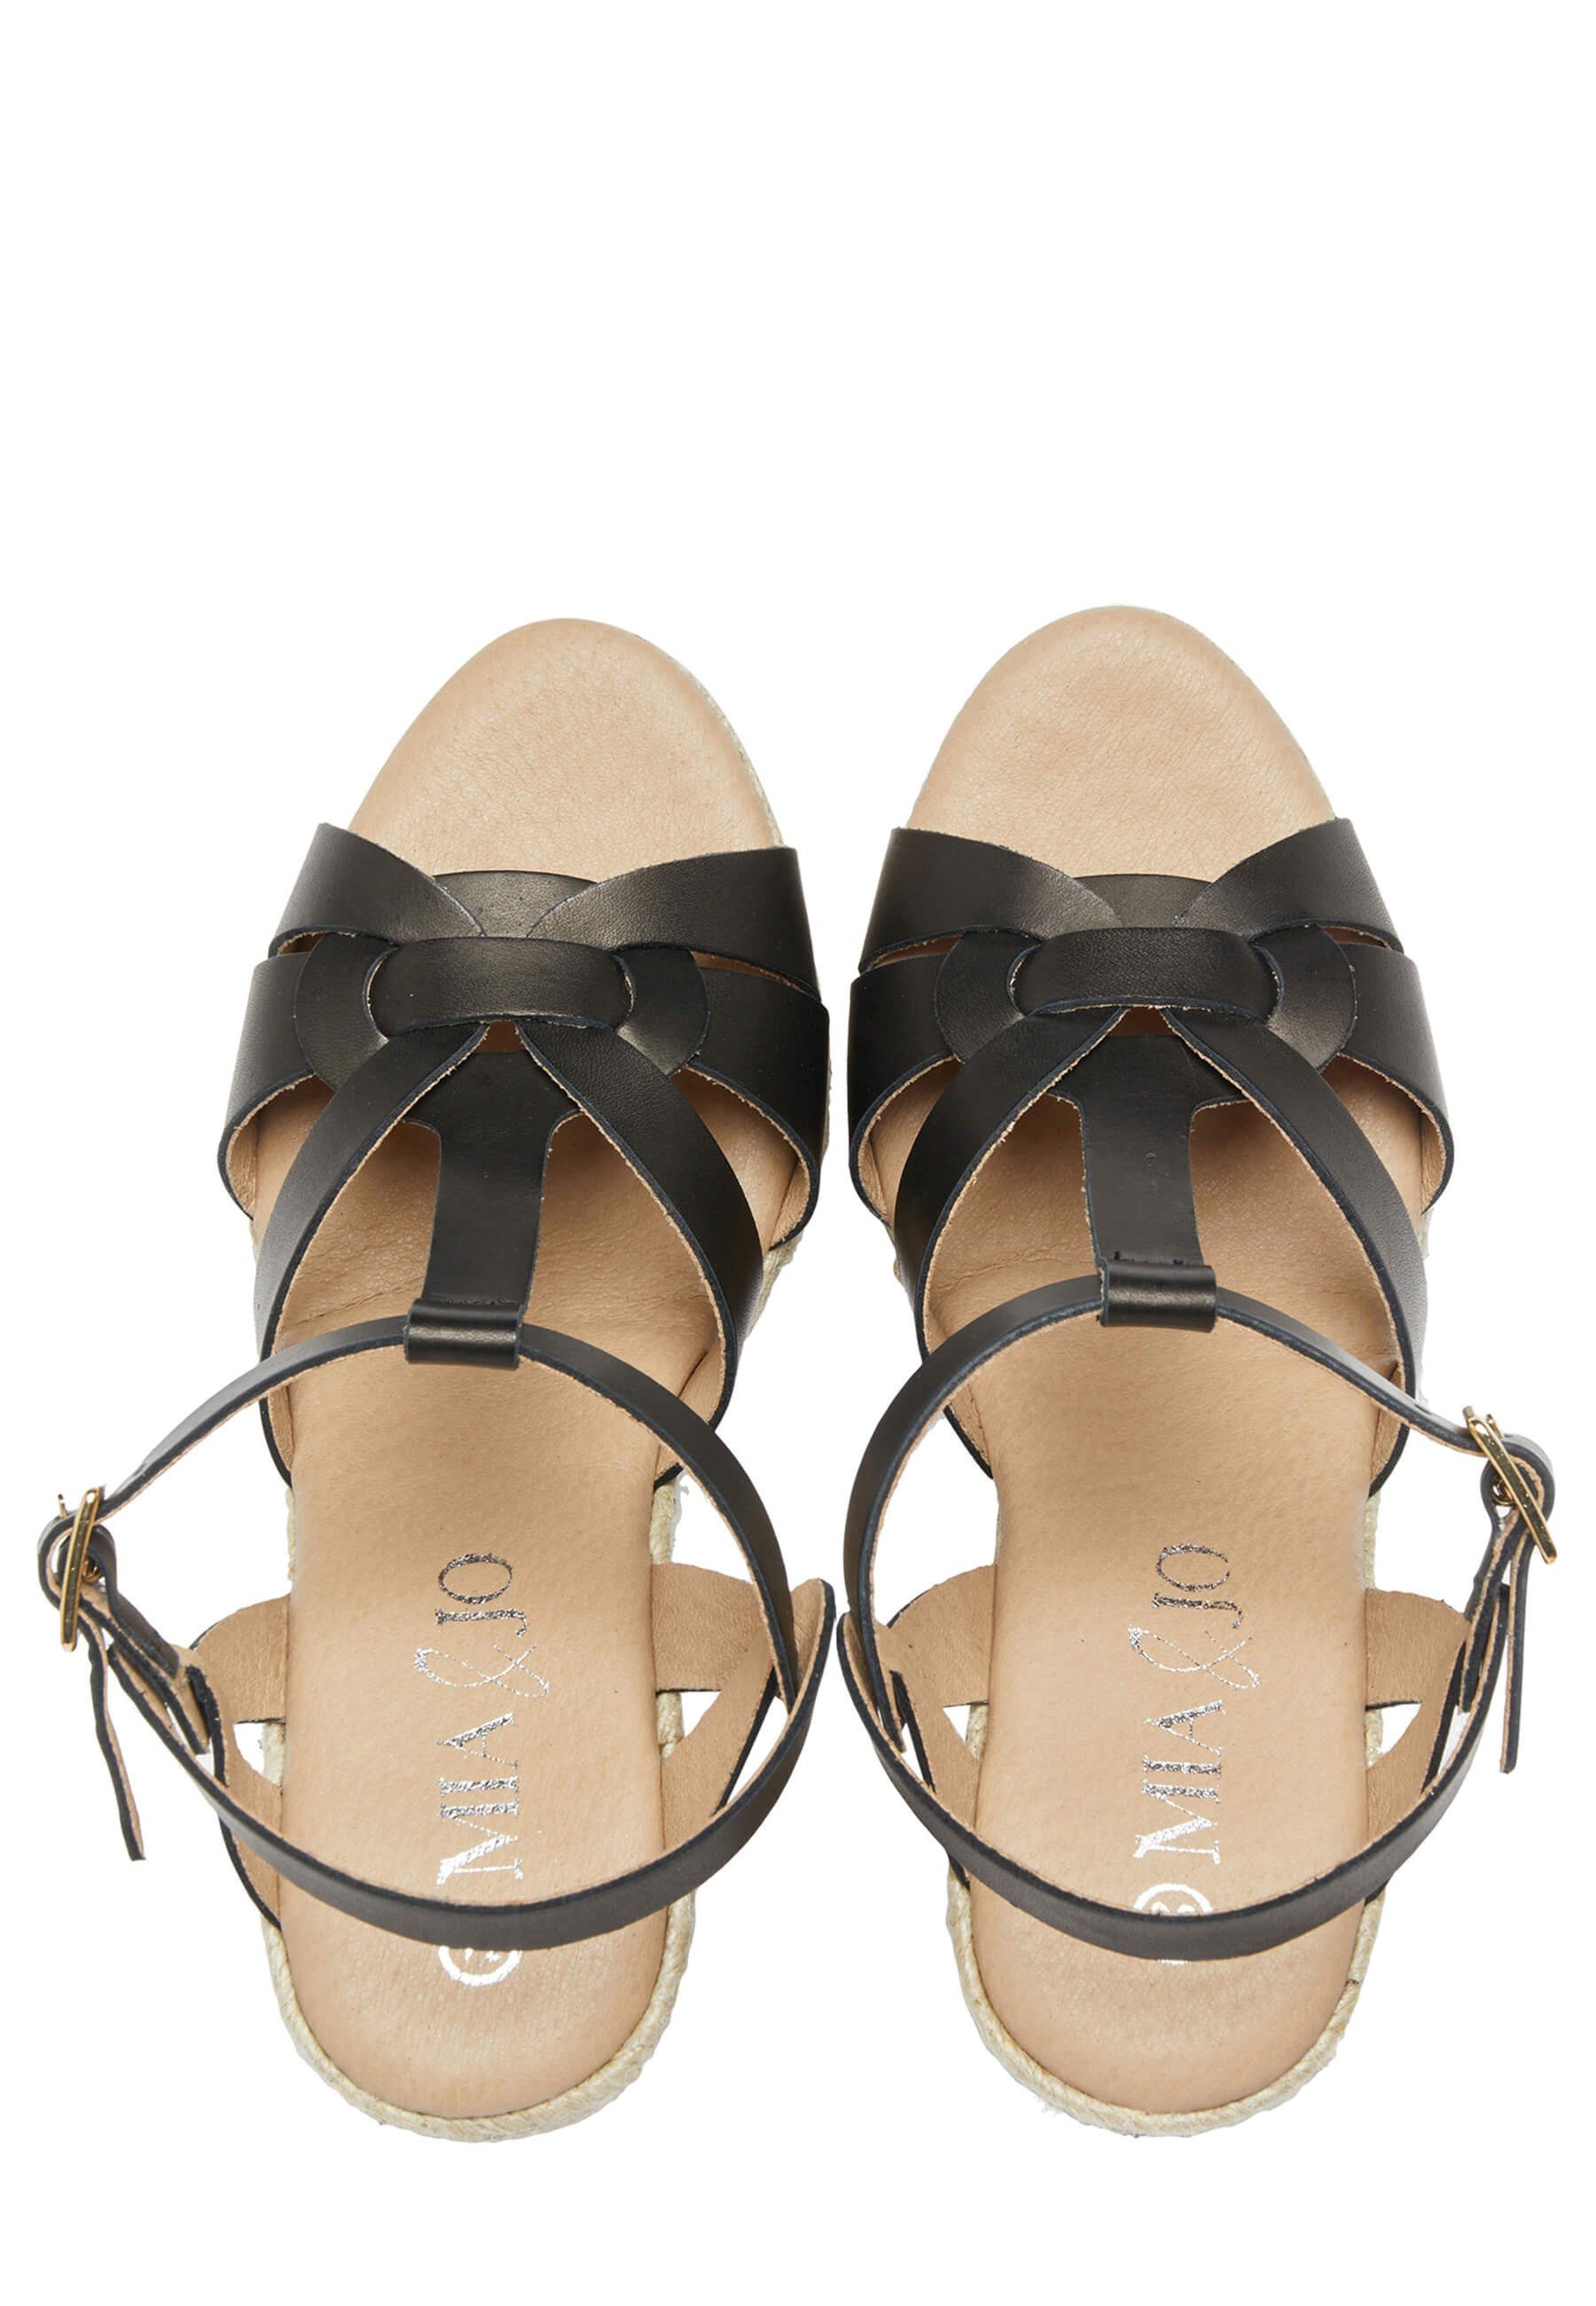 Sandale Sandaletten mia&jo Mit modernem Design mit Keilabsatz